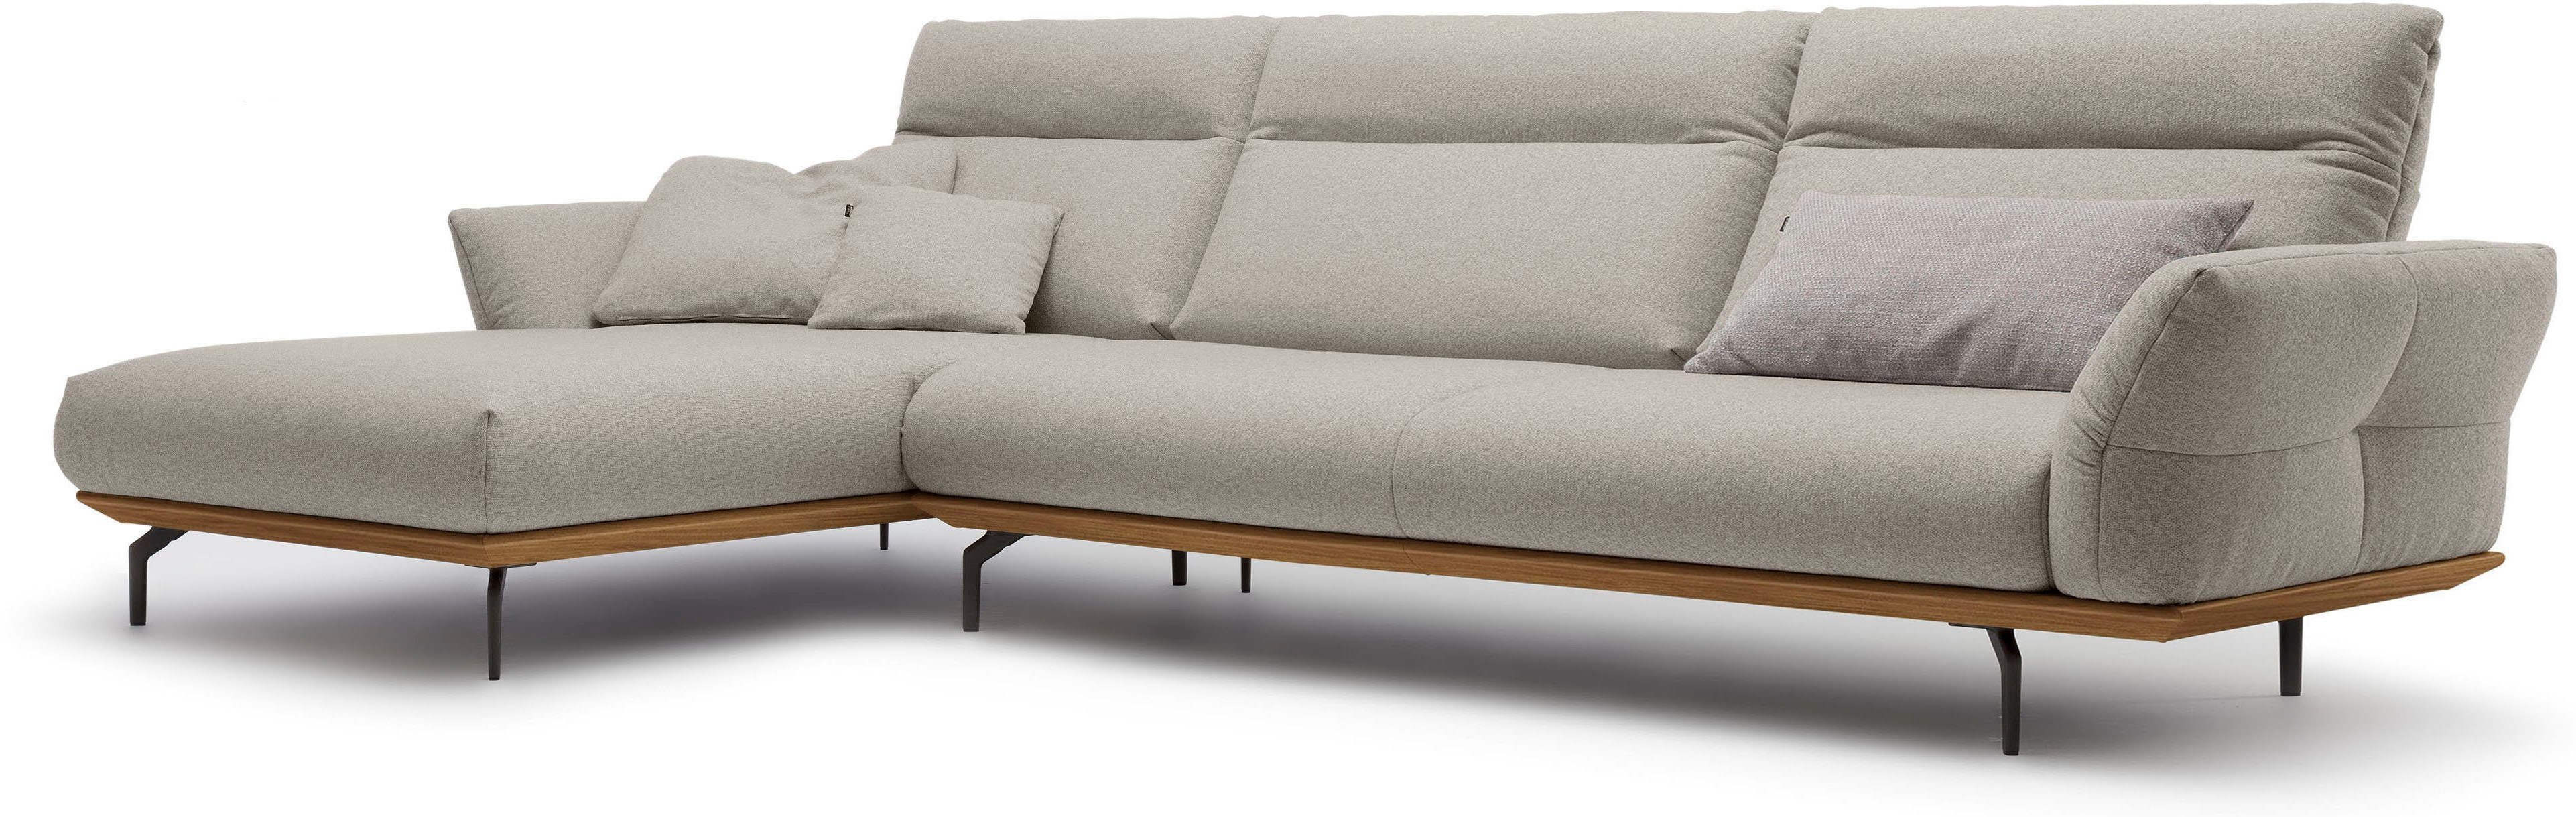 hülsta sofa Ecksofa hs.460, Sockel 338 Winkelfüße Nussbaum, cm in Umbragrau, Breite in